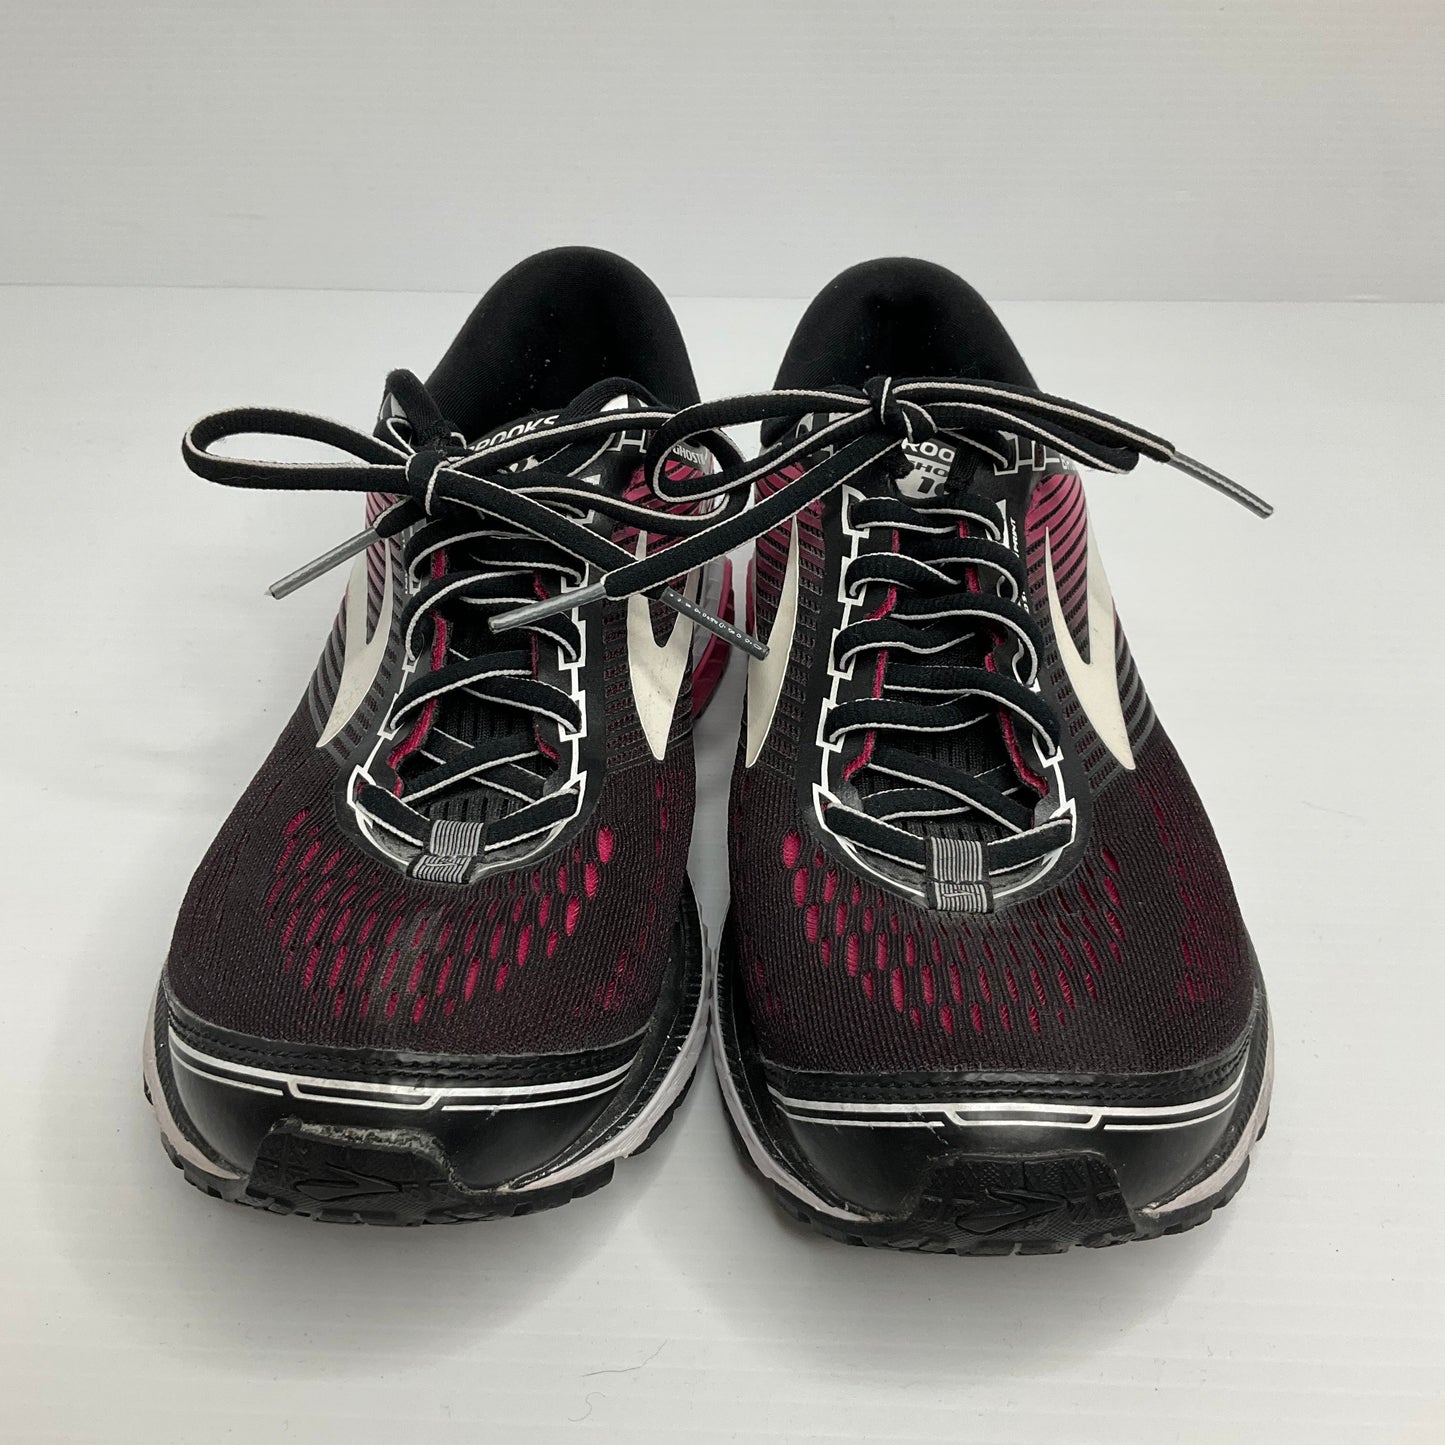 Black & Pink Shoes Athletic Brooks, Size 8.5